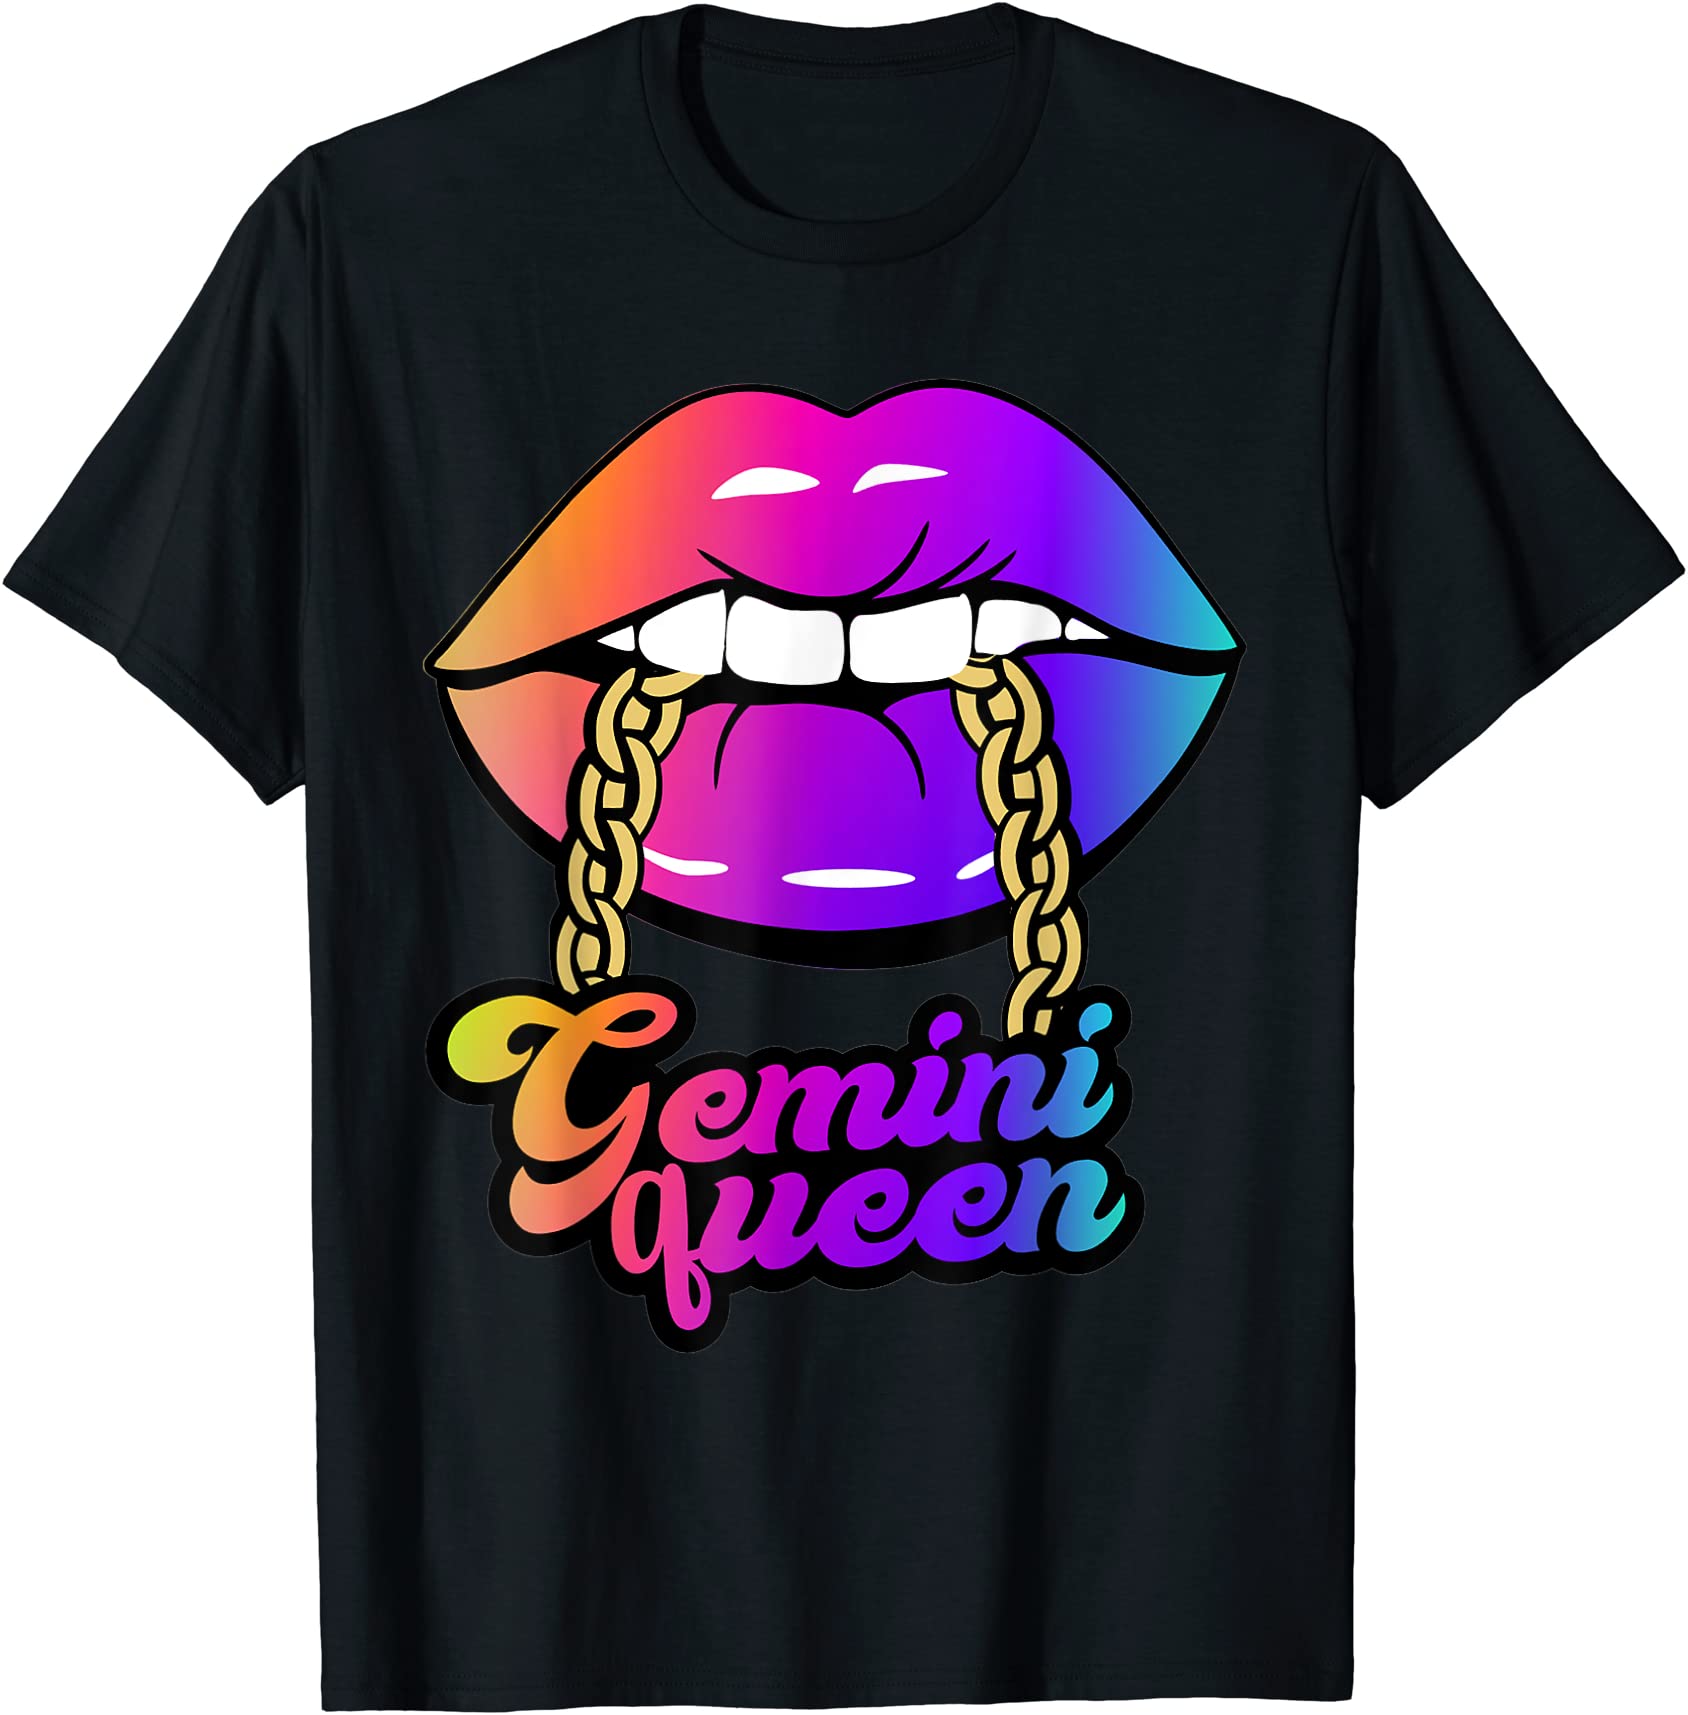 gemini queen t shirt men - Buy t-shirt designs